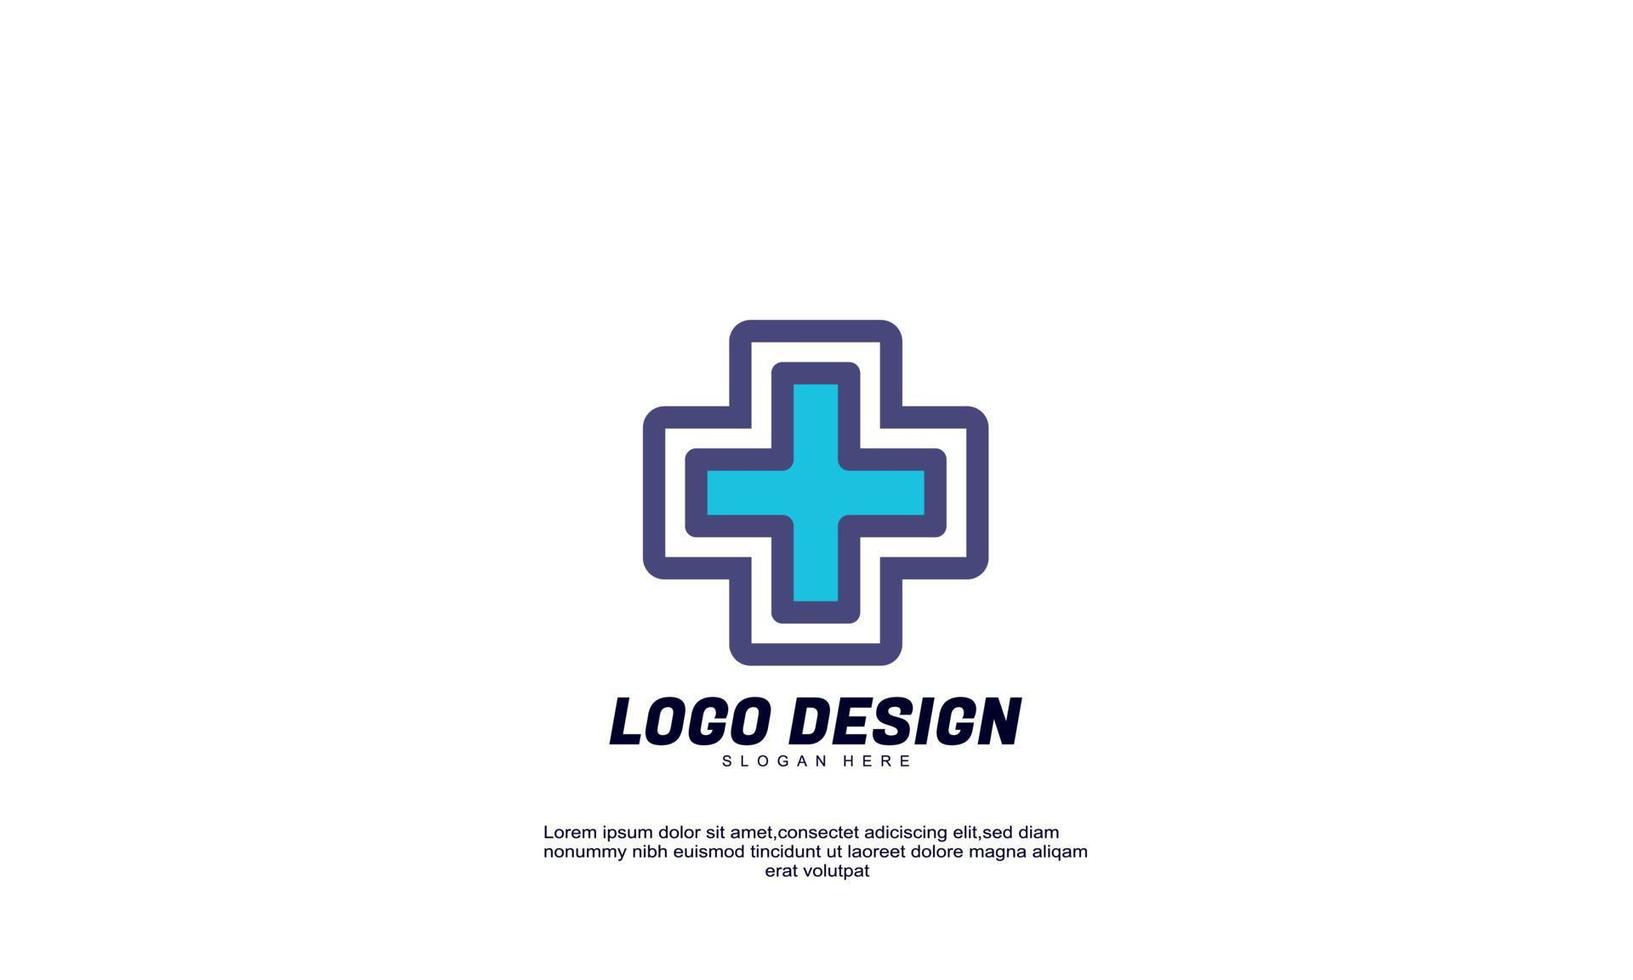 estoque vetor logotipo criativo abstrato farmácia médica para vetor de design de empresa saudável